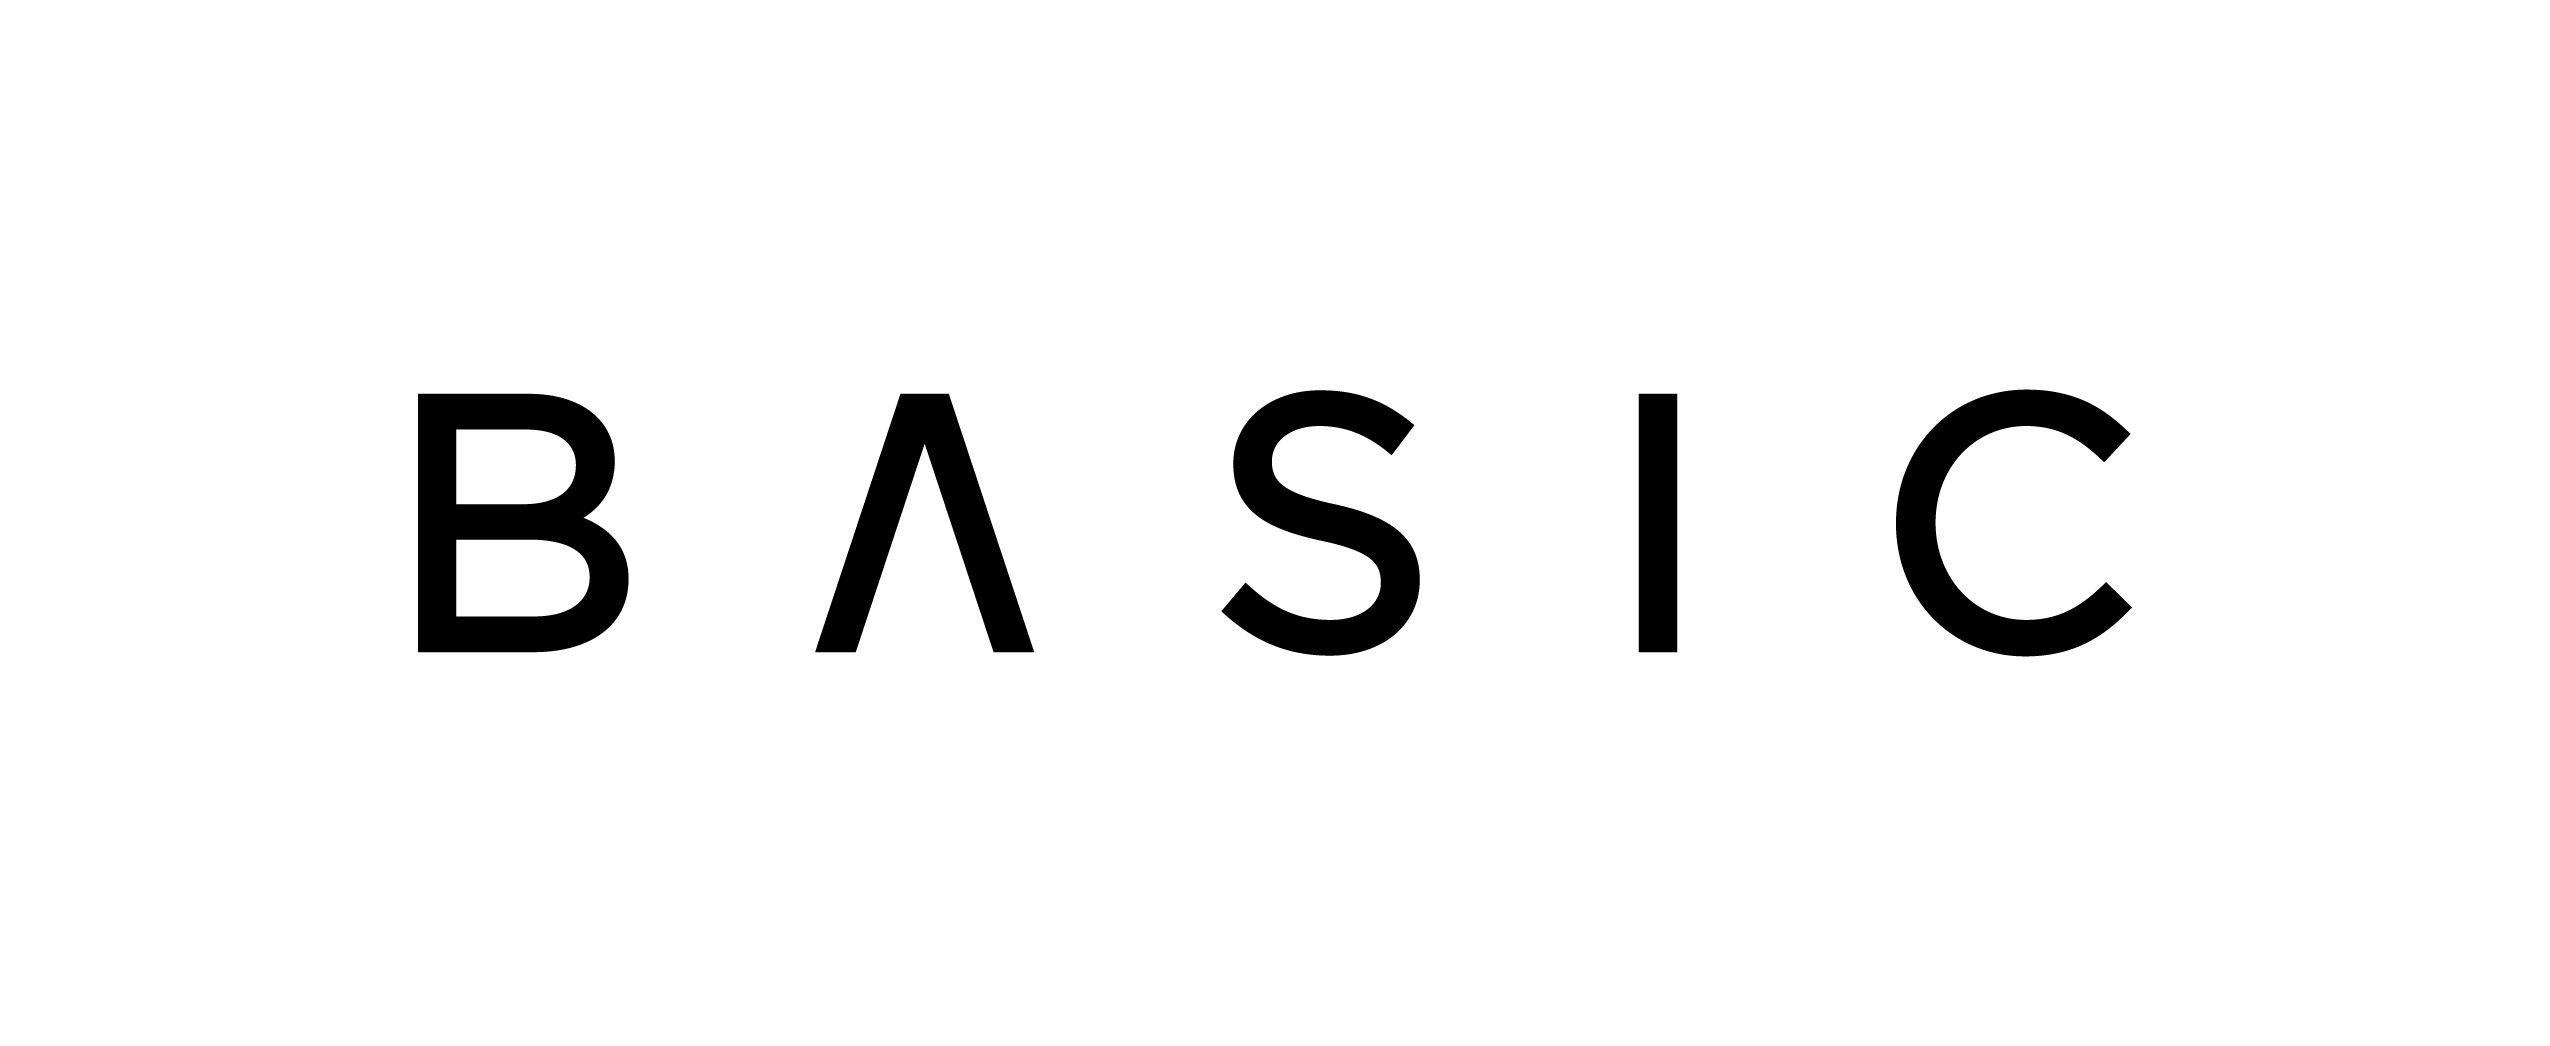 Basic Logo - basic logo - Google zoeken | Logo inspiratie - Design agency, Logos ...